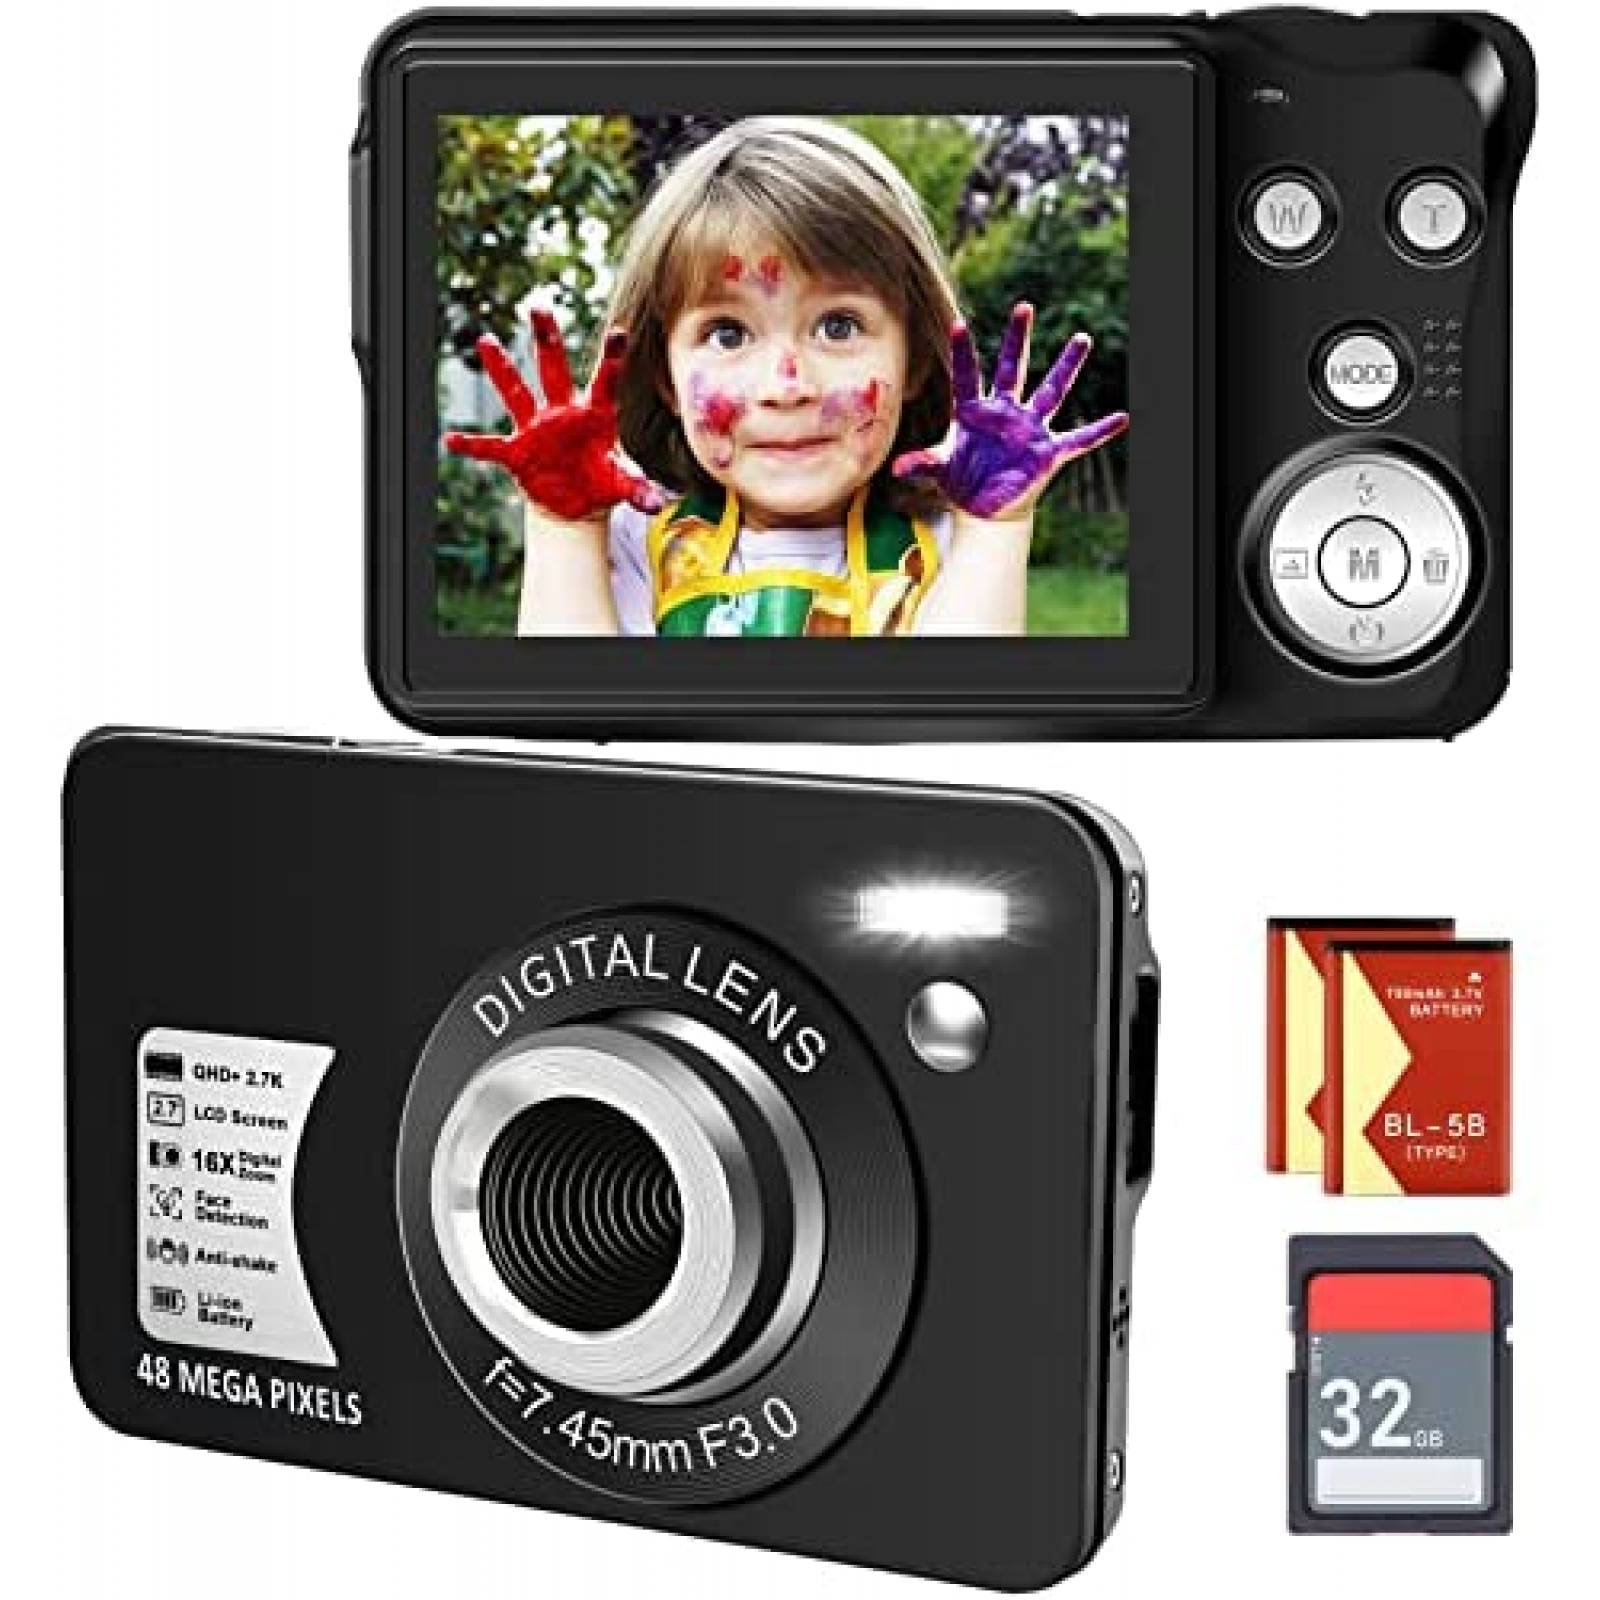 Cámara digital, cámara digital FHD 2.7K para niños, cámara digital